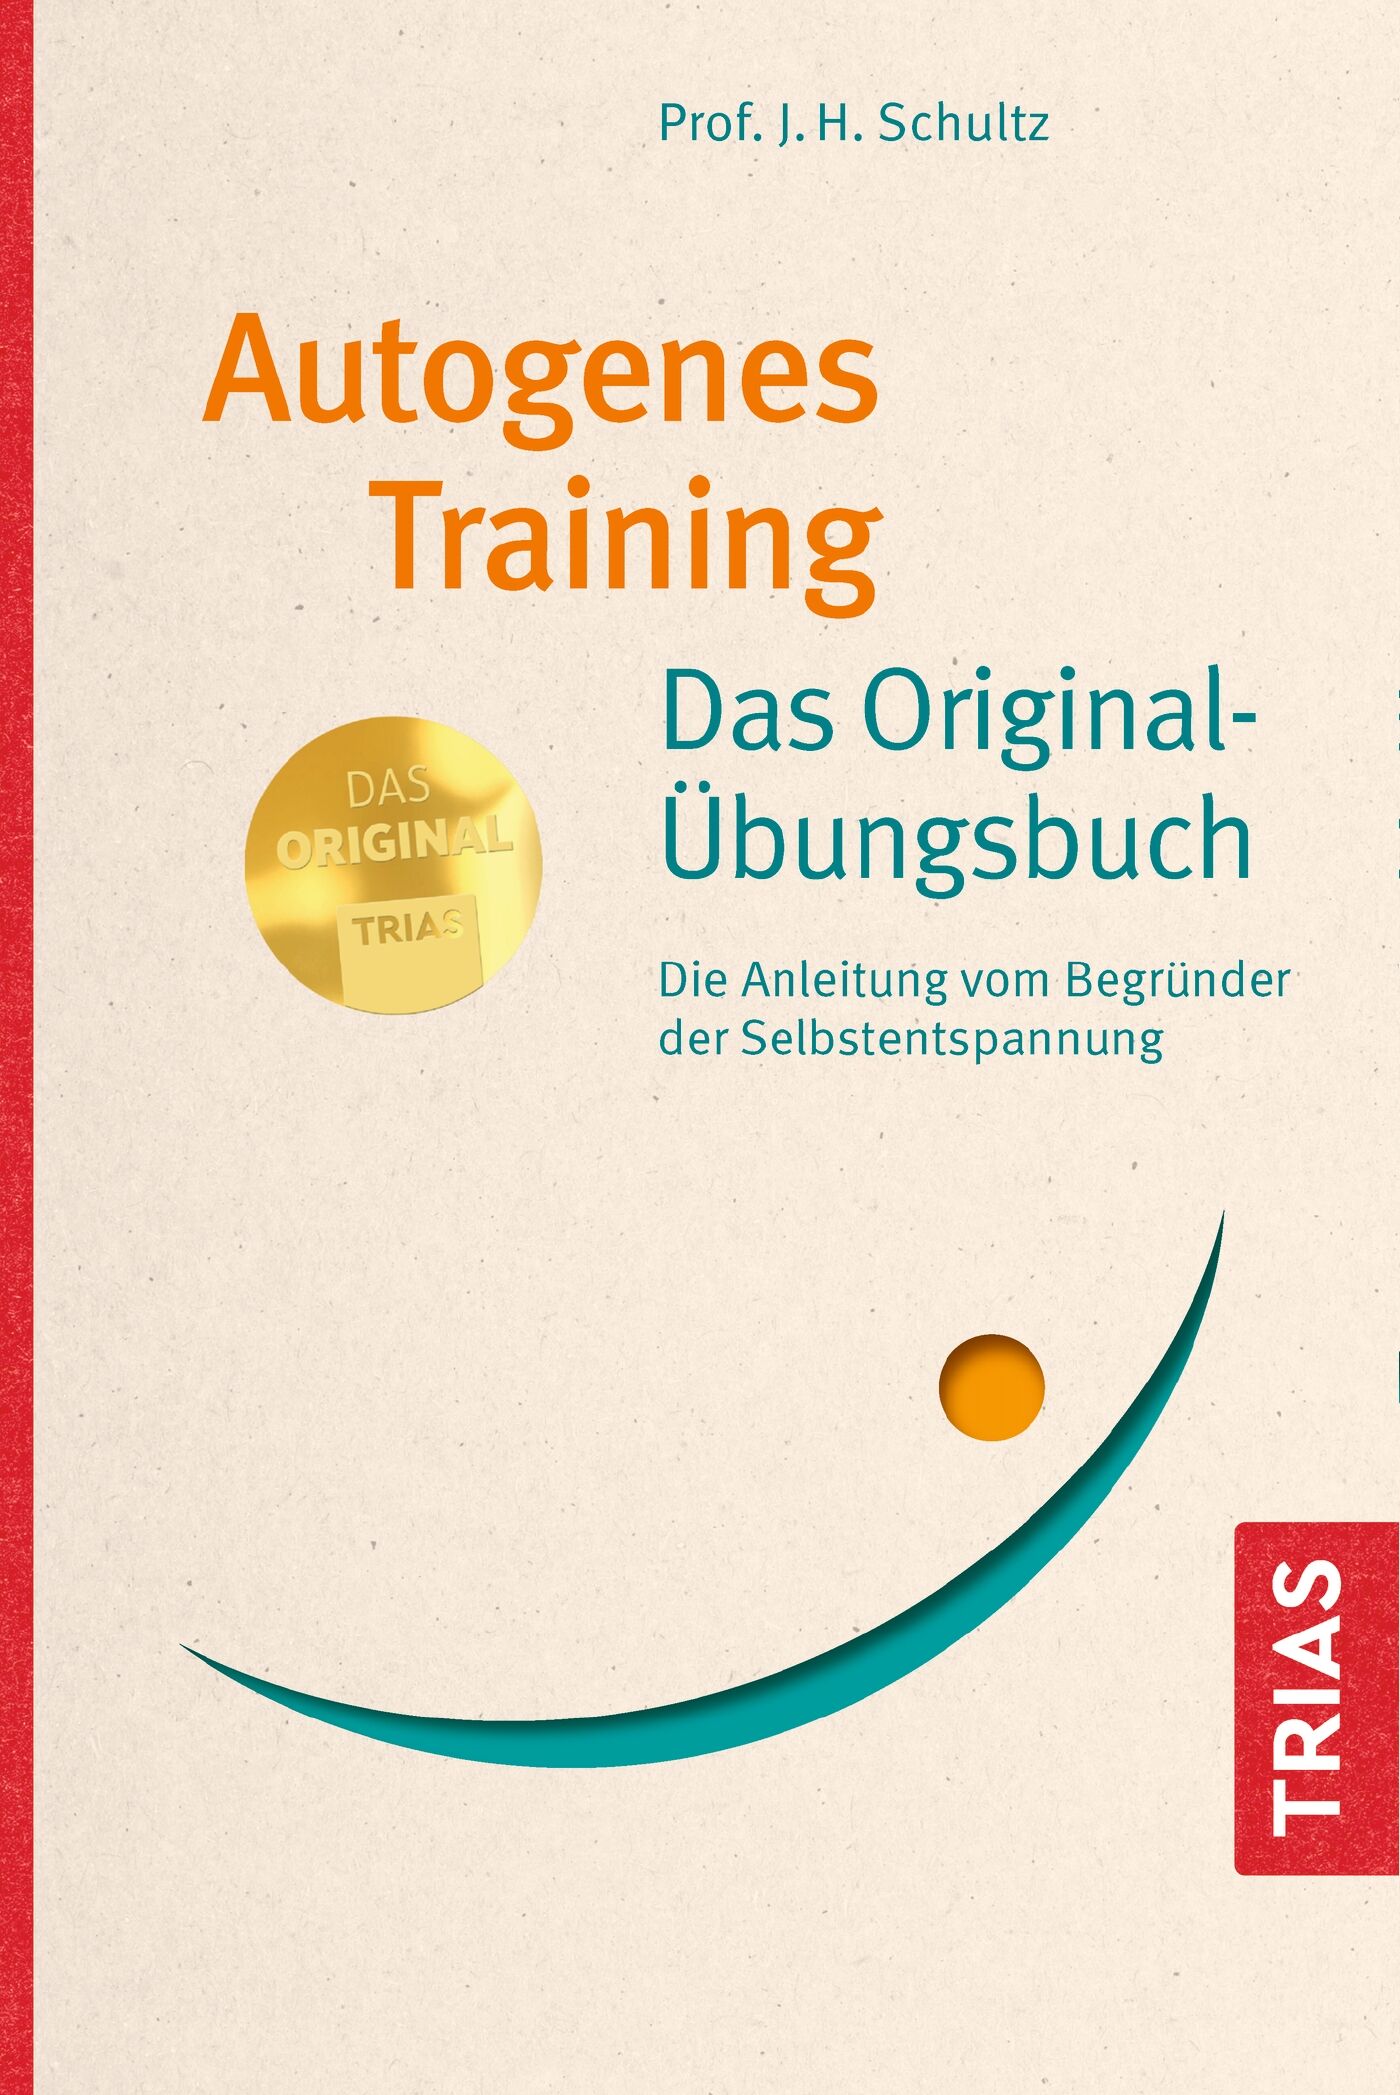 Autogenes Training Das Original-Übungsbuch, 9783432110356